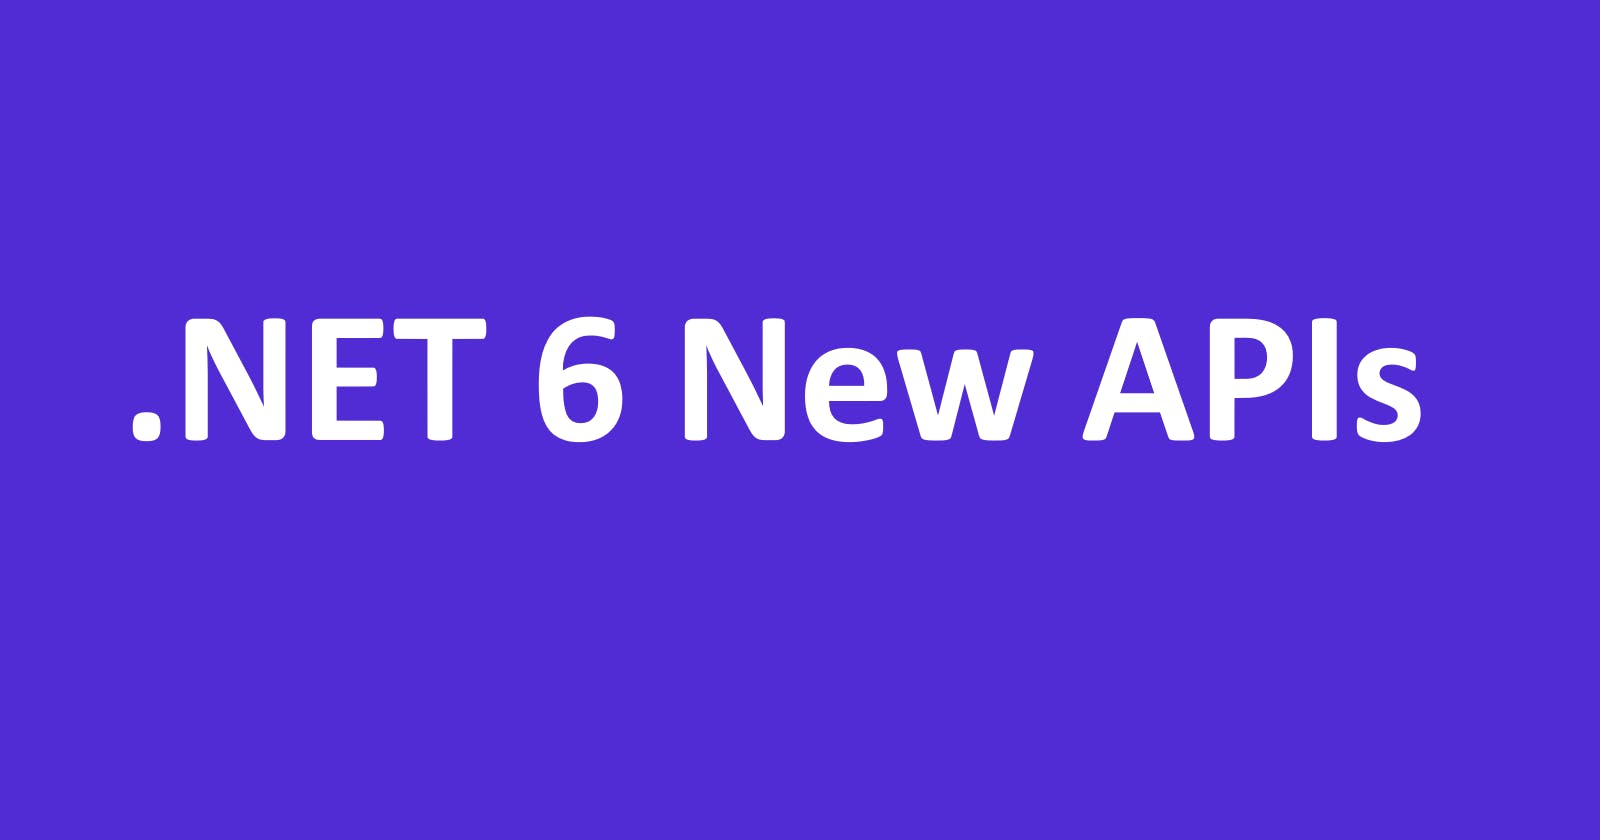 20 New APIs in .NET 6